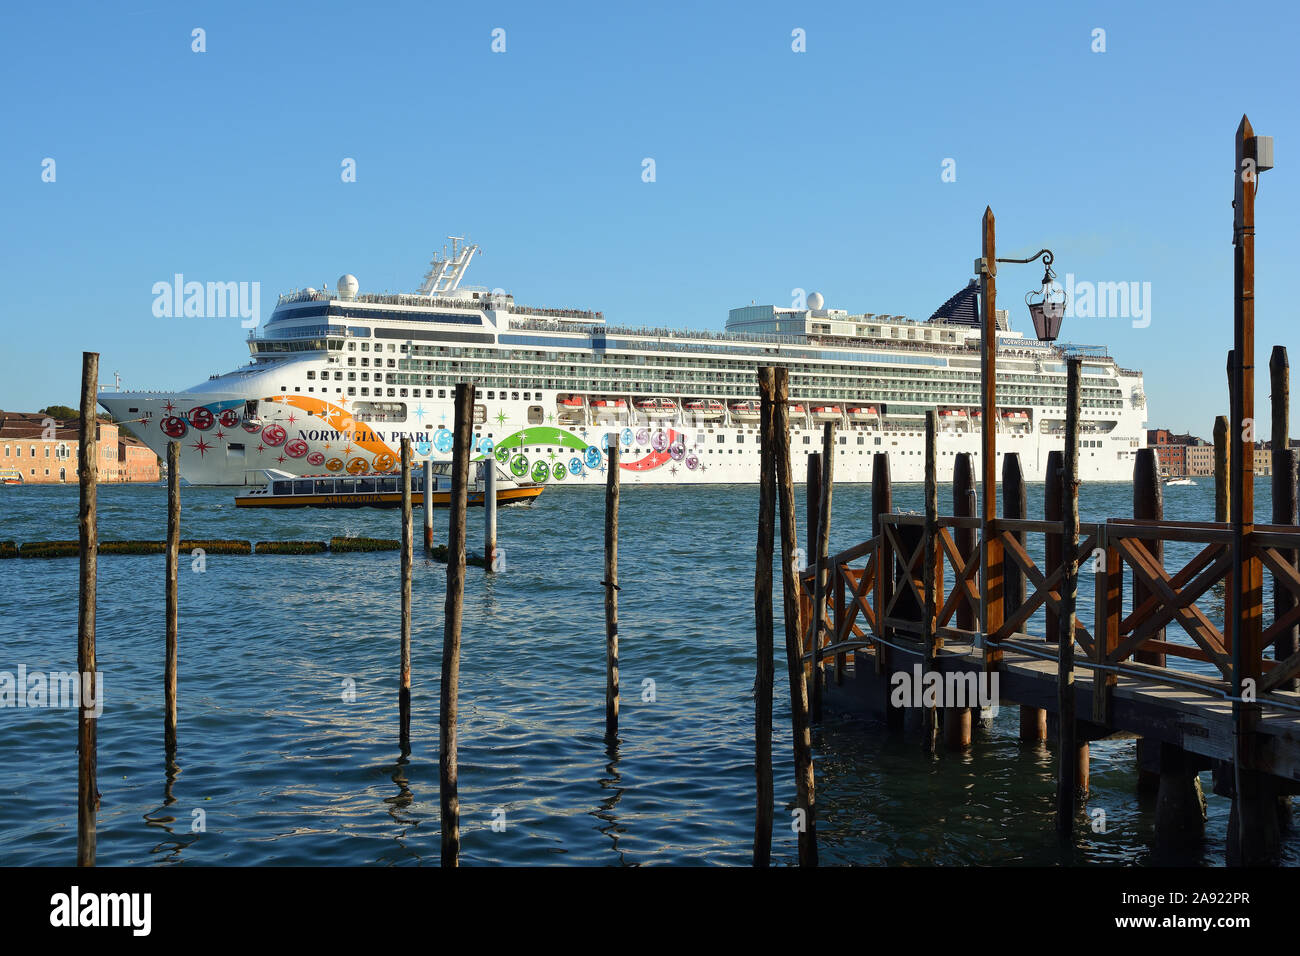 Cruise ship in the Lagoon bevor San Marco in Venice - Italy. Stock Photo